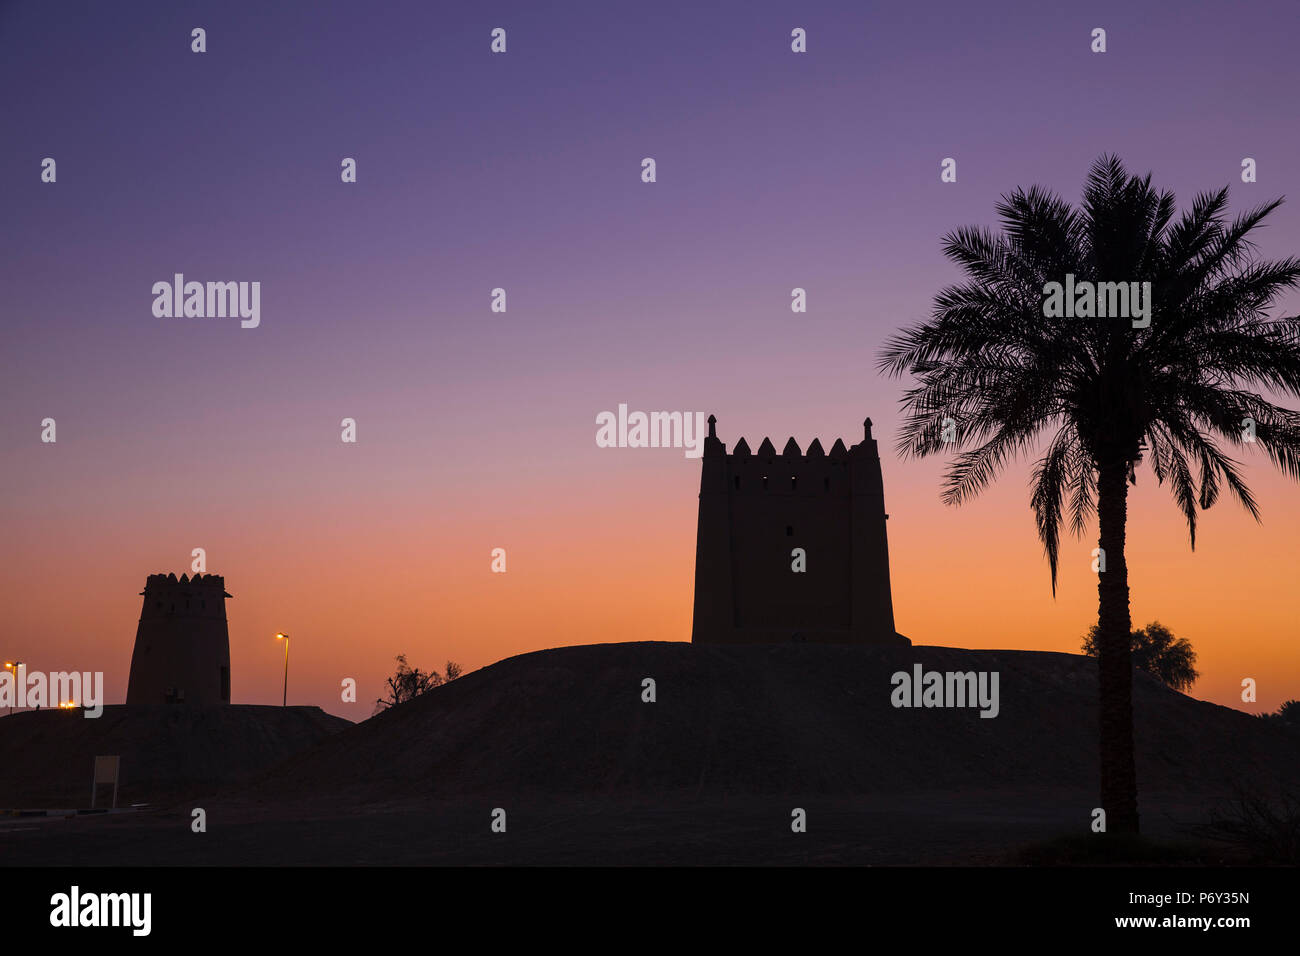 United Arab Emirates, Abu Dhabi, Al Ain, Hili, Hili Towers Stock Photo